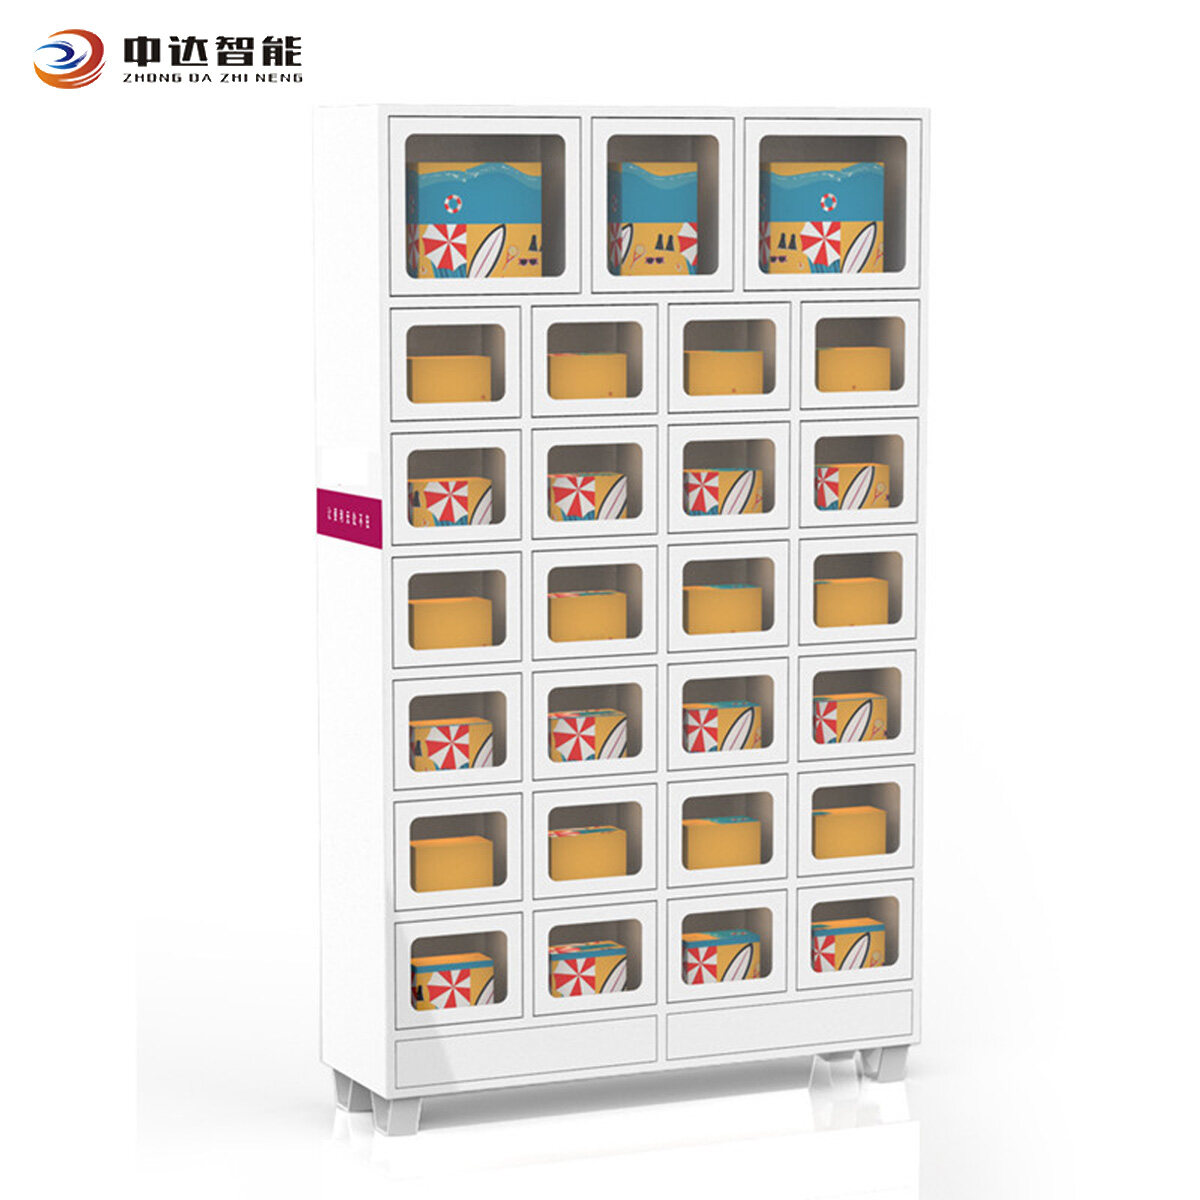 27 cells Lattice vending machine vending machine locker smart vending machine